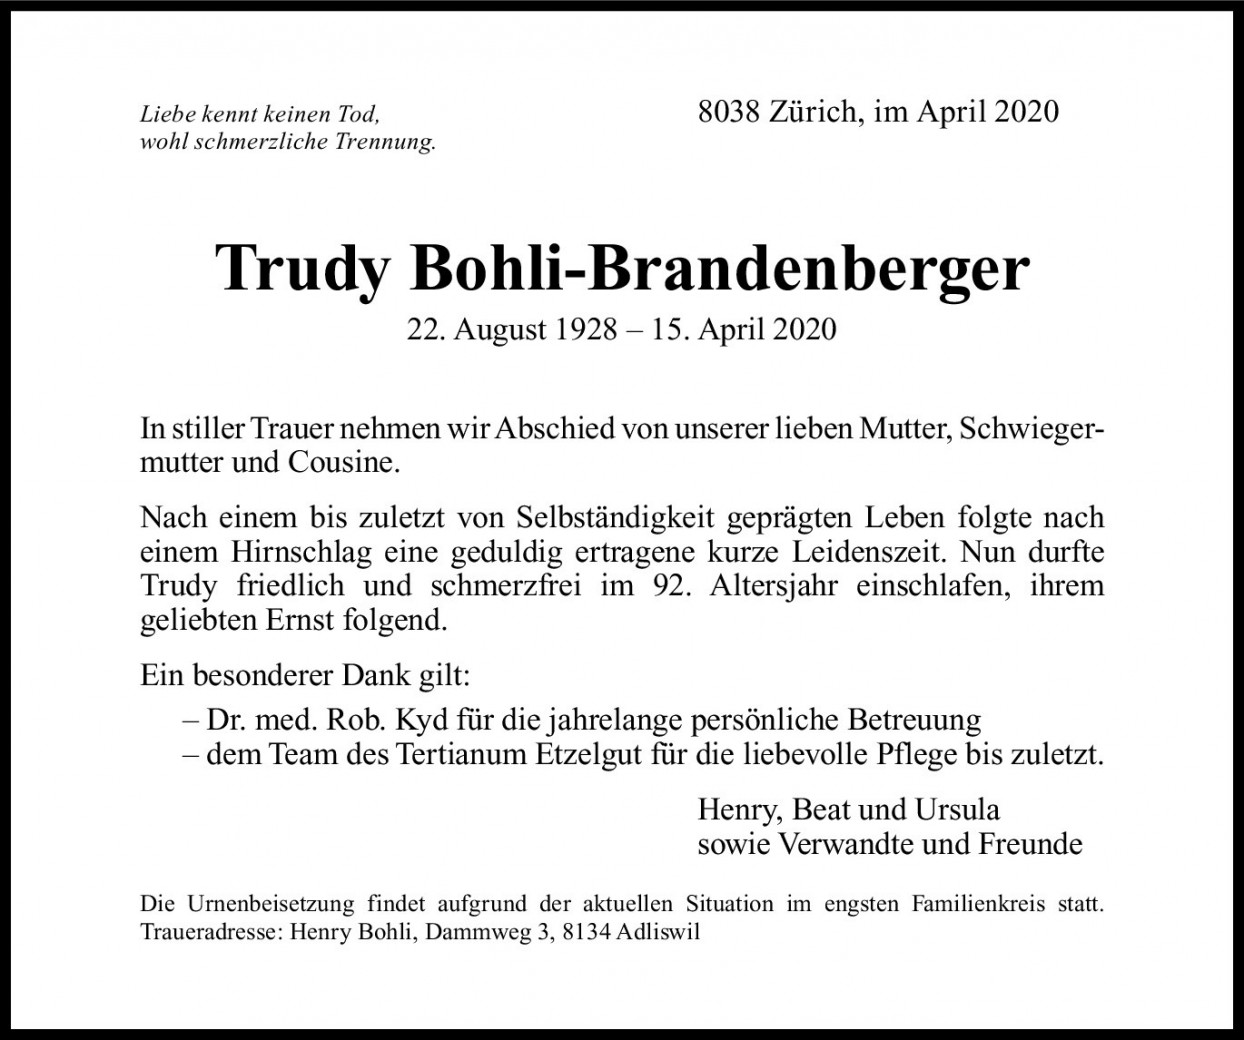 Trudy Bohli-Brandenberger